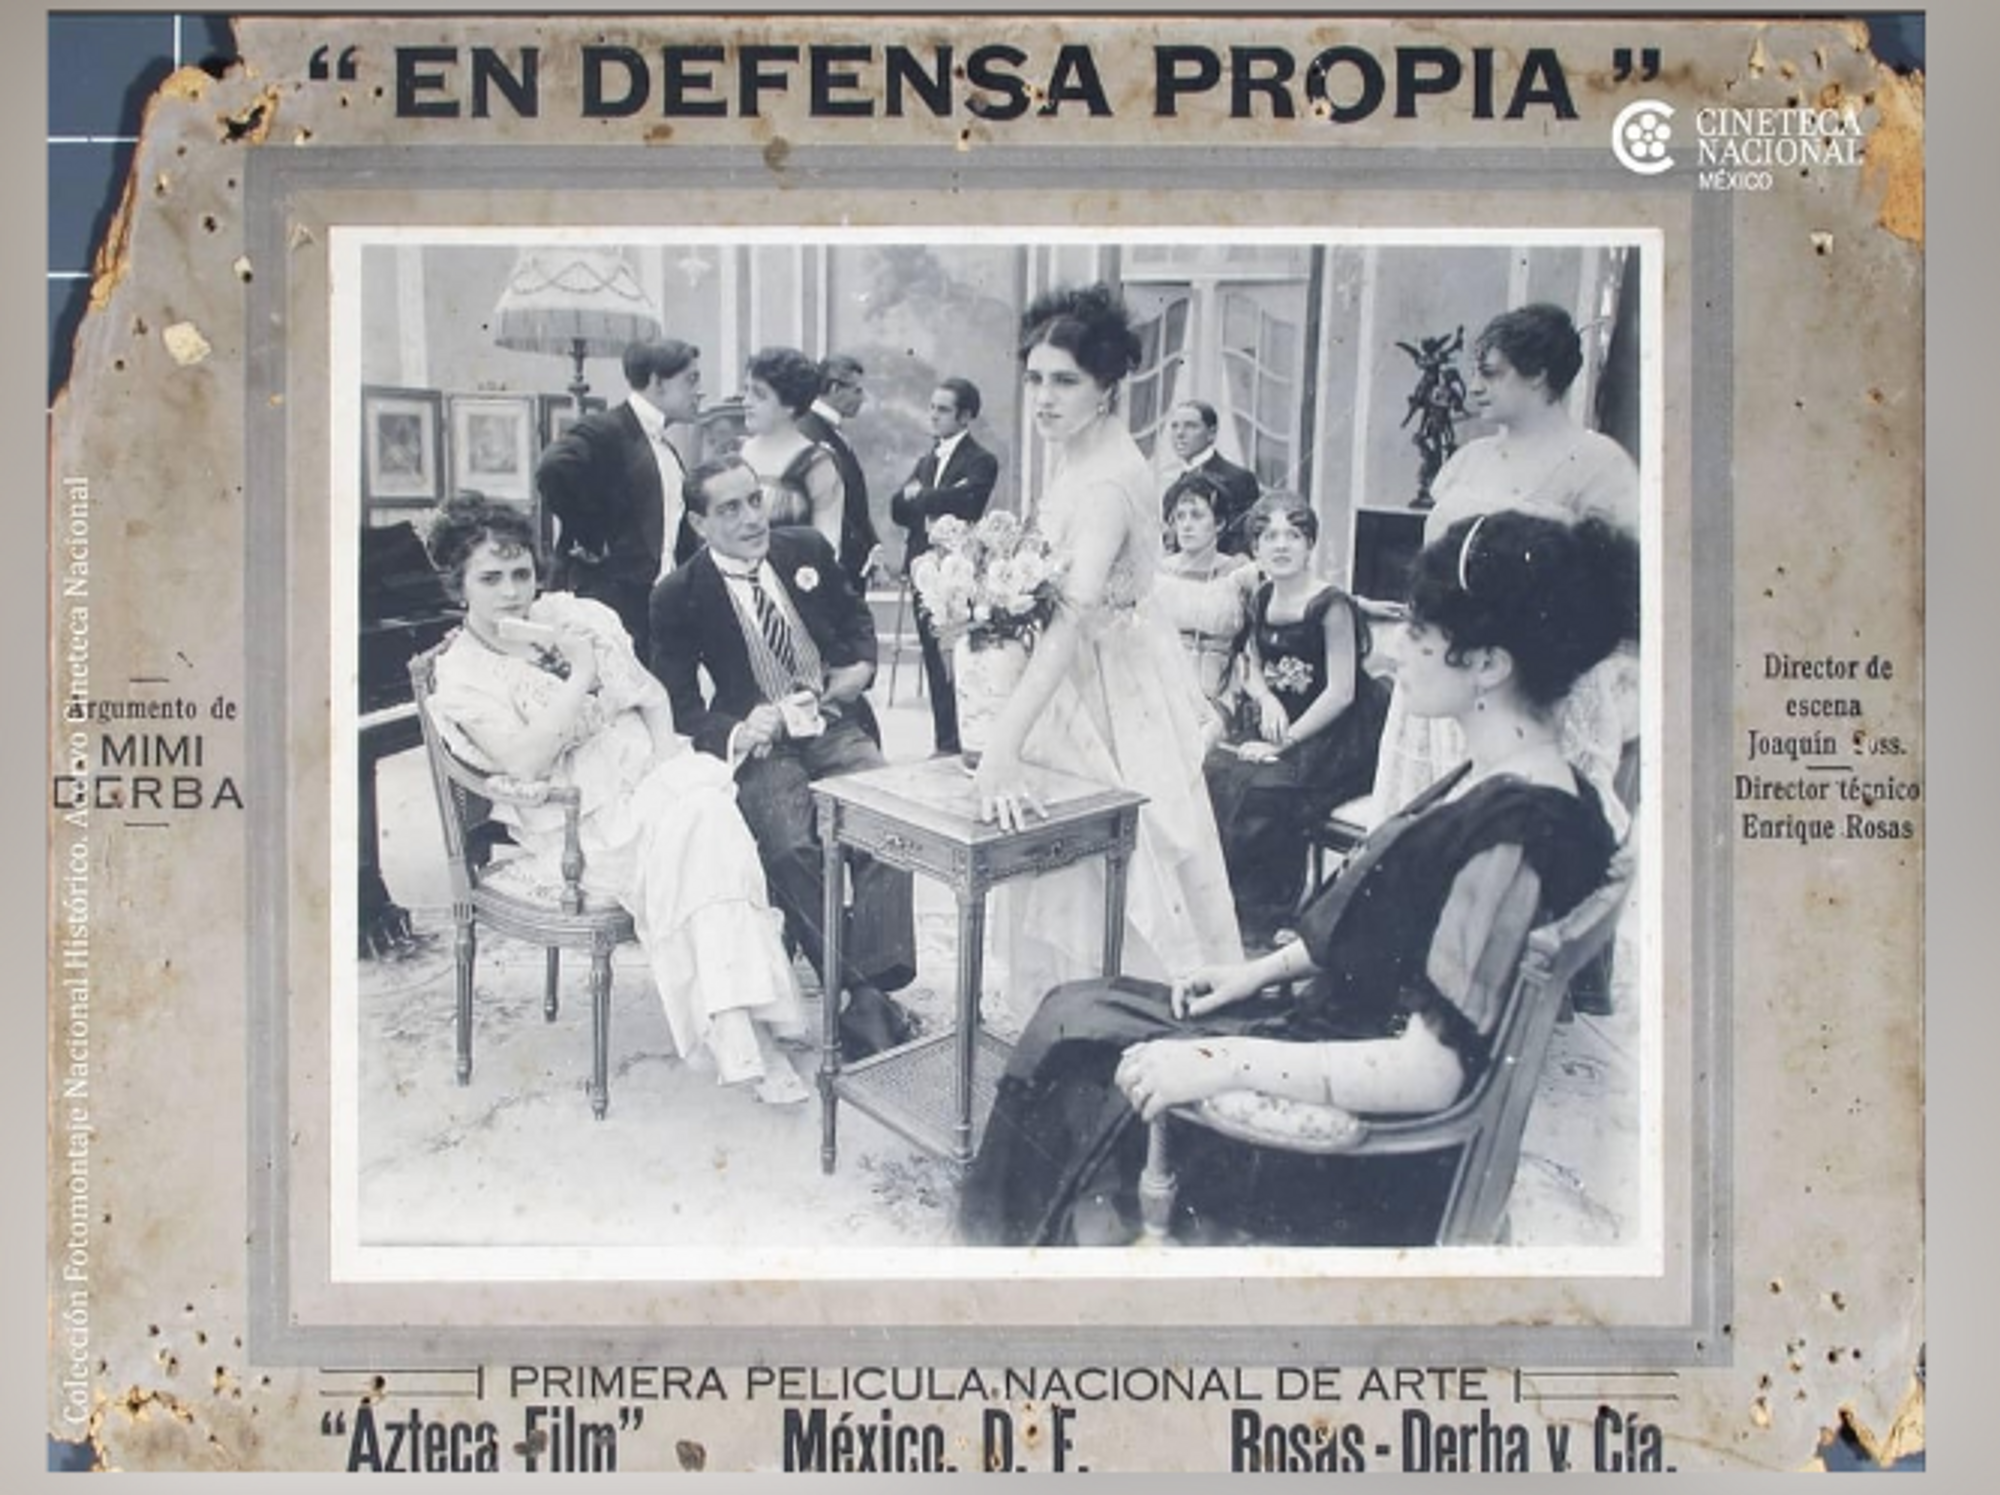 Promotional image of the film "En Defensa Propia,"